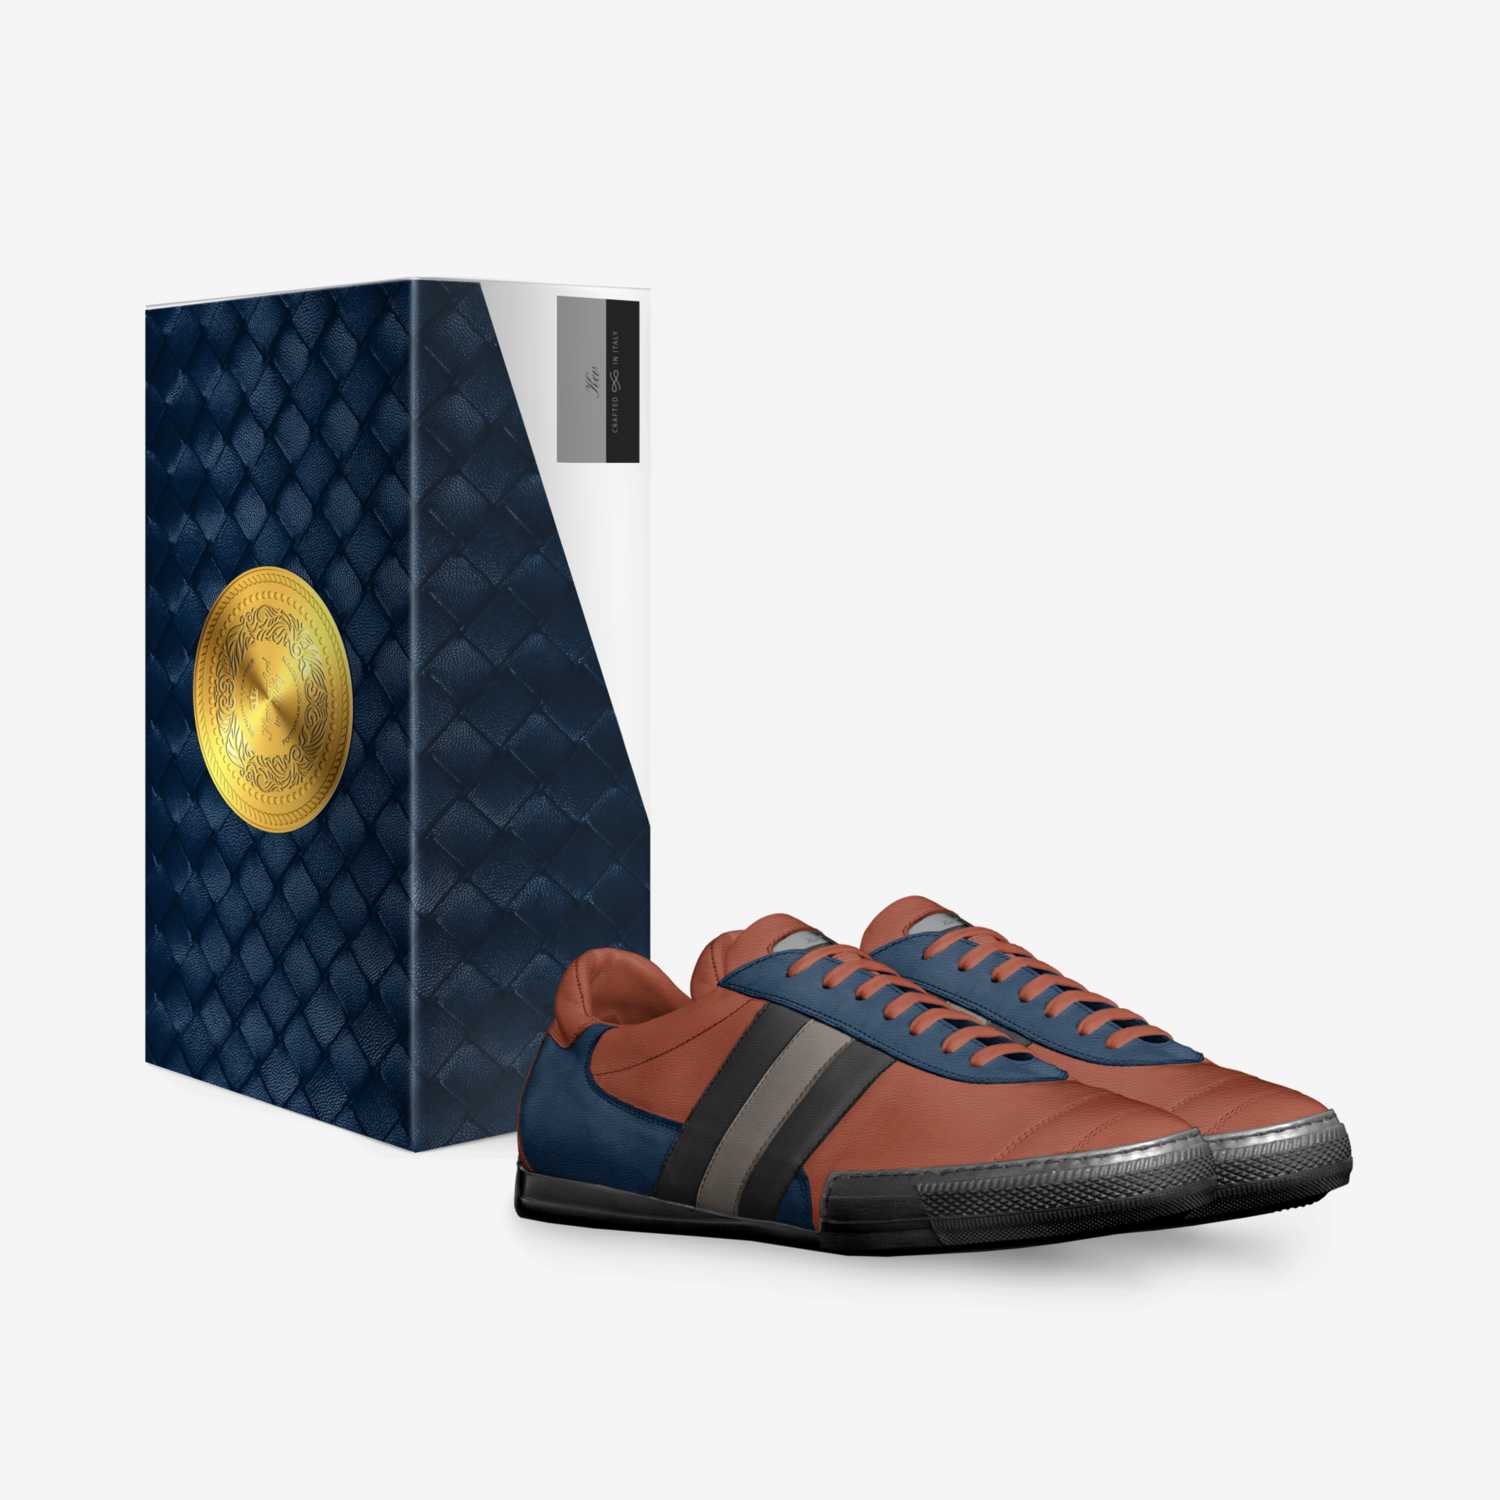 Kev custom made in Italy shoes by Karonda Edwards | Box view